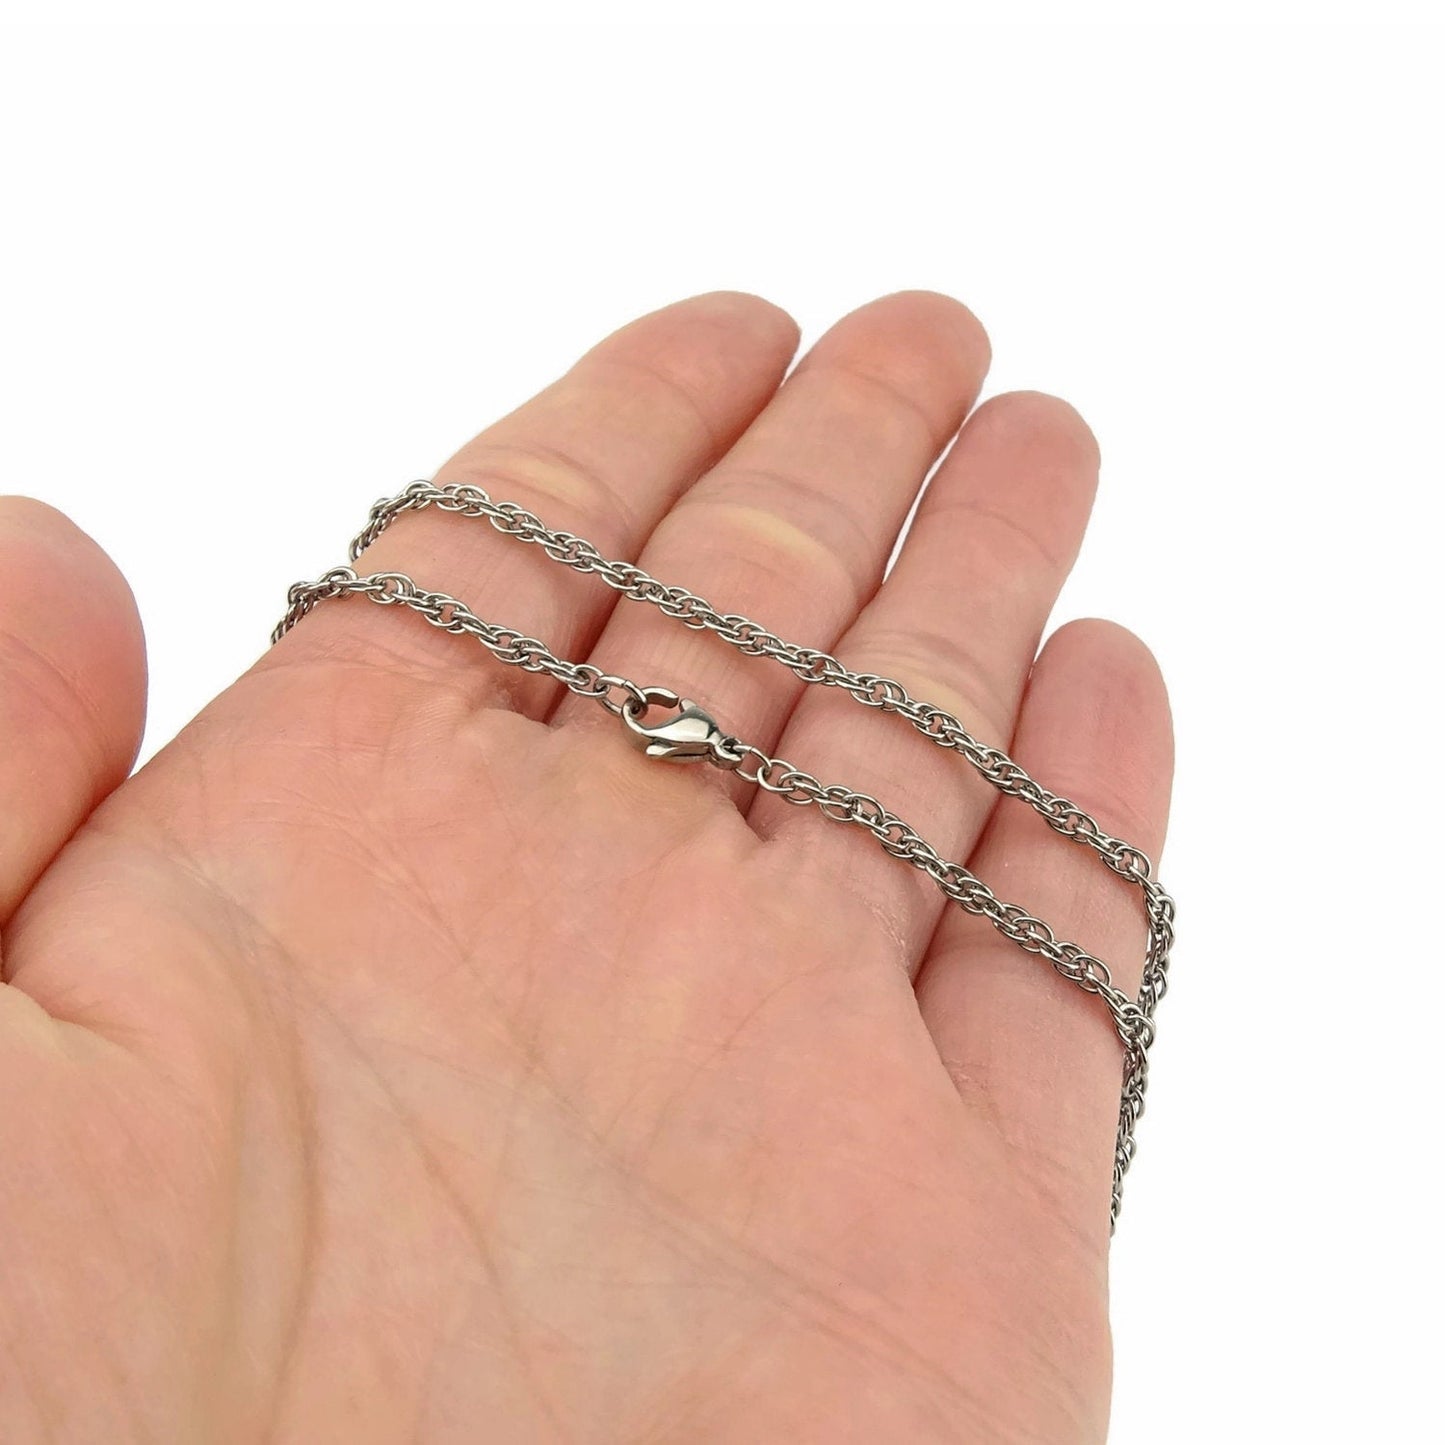 Double Rope Titanium Chain Necklace, Pure Titanium Chain Necklace for Sensitive Skin, Hypoallergenic and Nickel Free Titanium Necklace